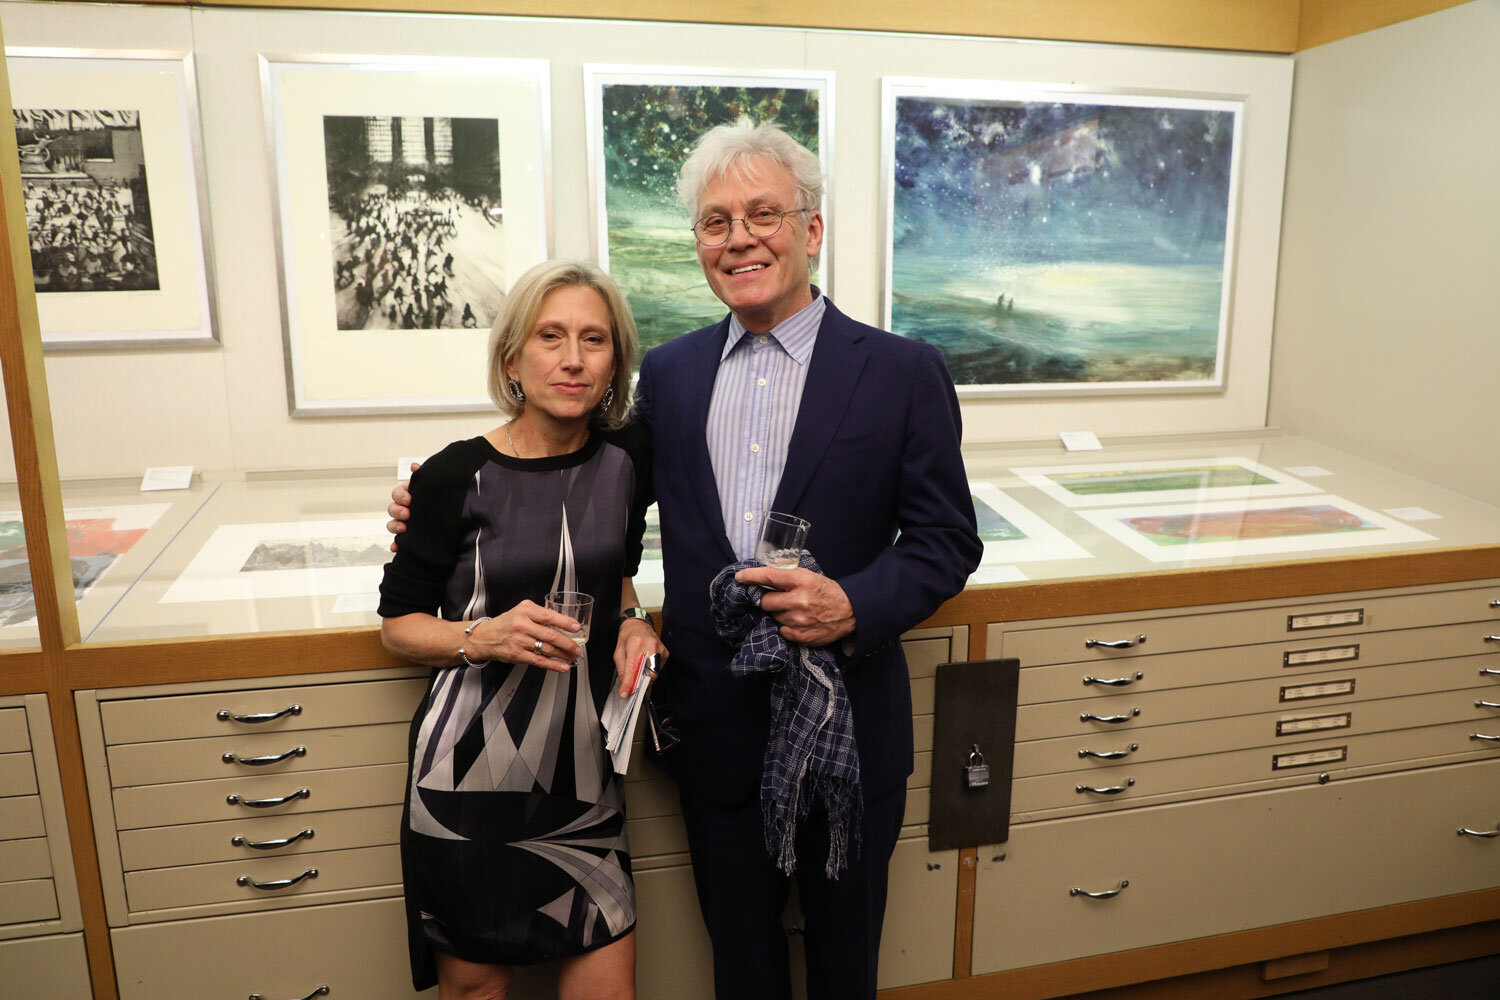  At the Mezzanine Gallery in the Metropolitan Museum of Art, with Director Laura Einstein, 2018 